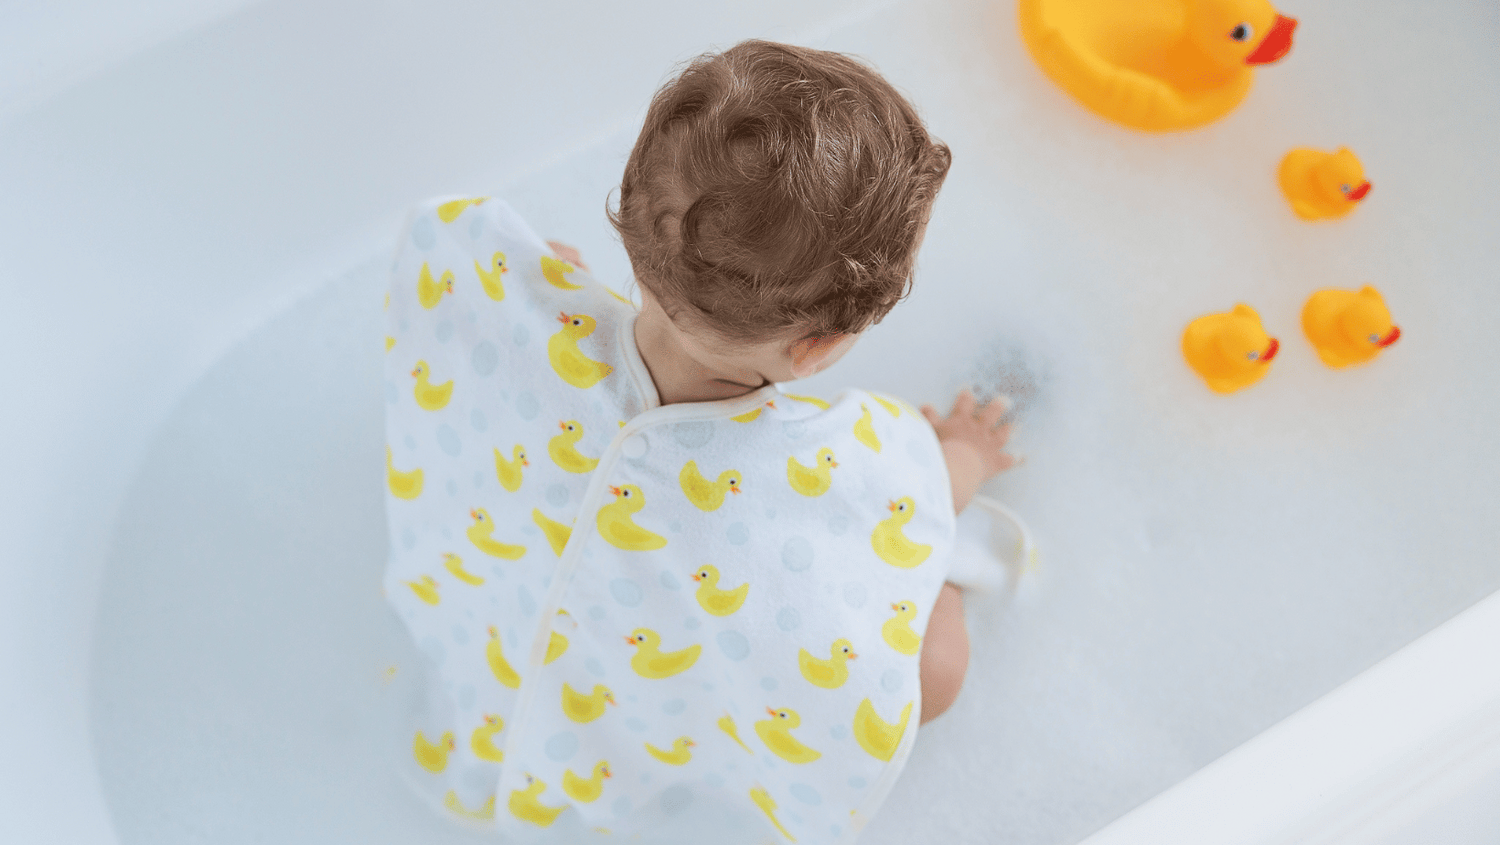 Yellow duck bath towel, bath ducks floating in warm bubble bath, child playing with yellow bath ducks